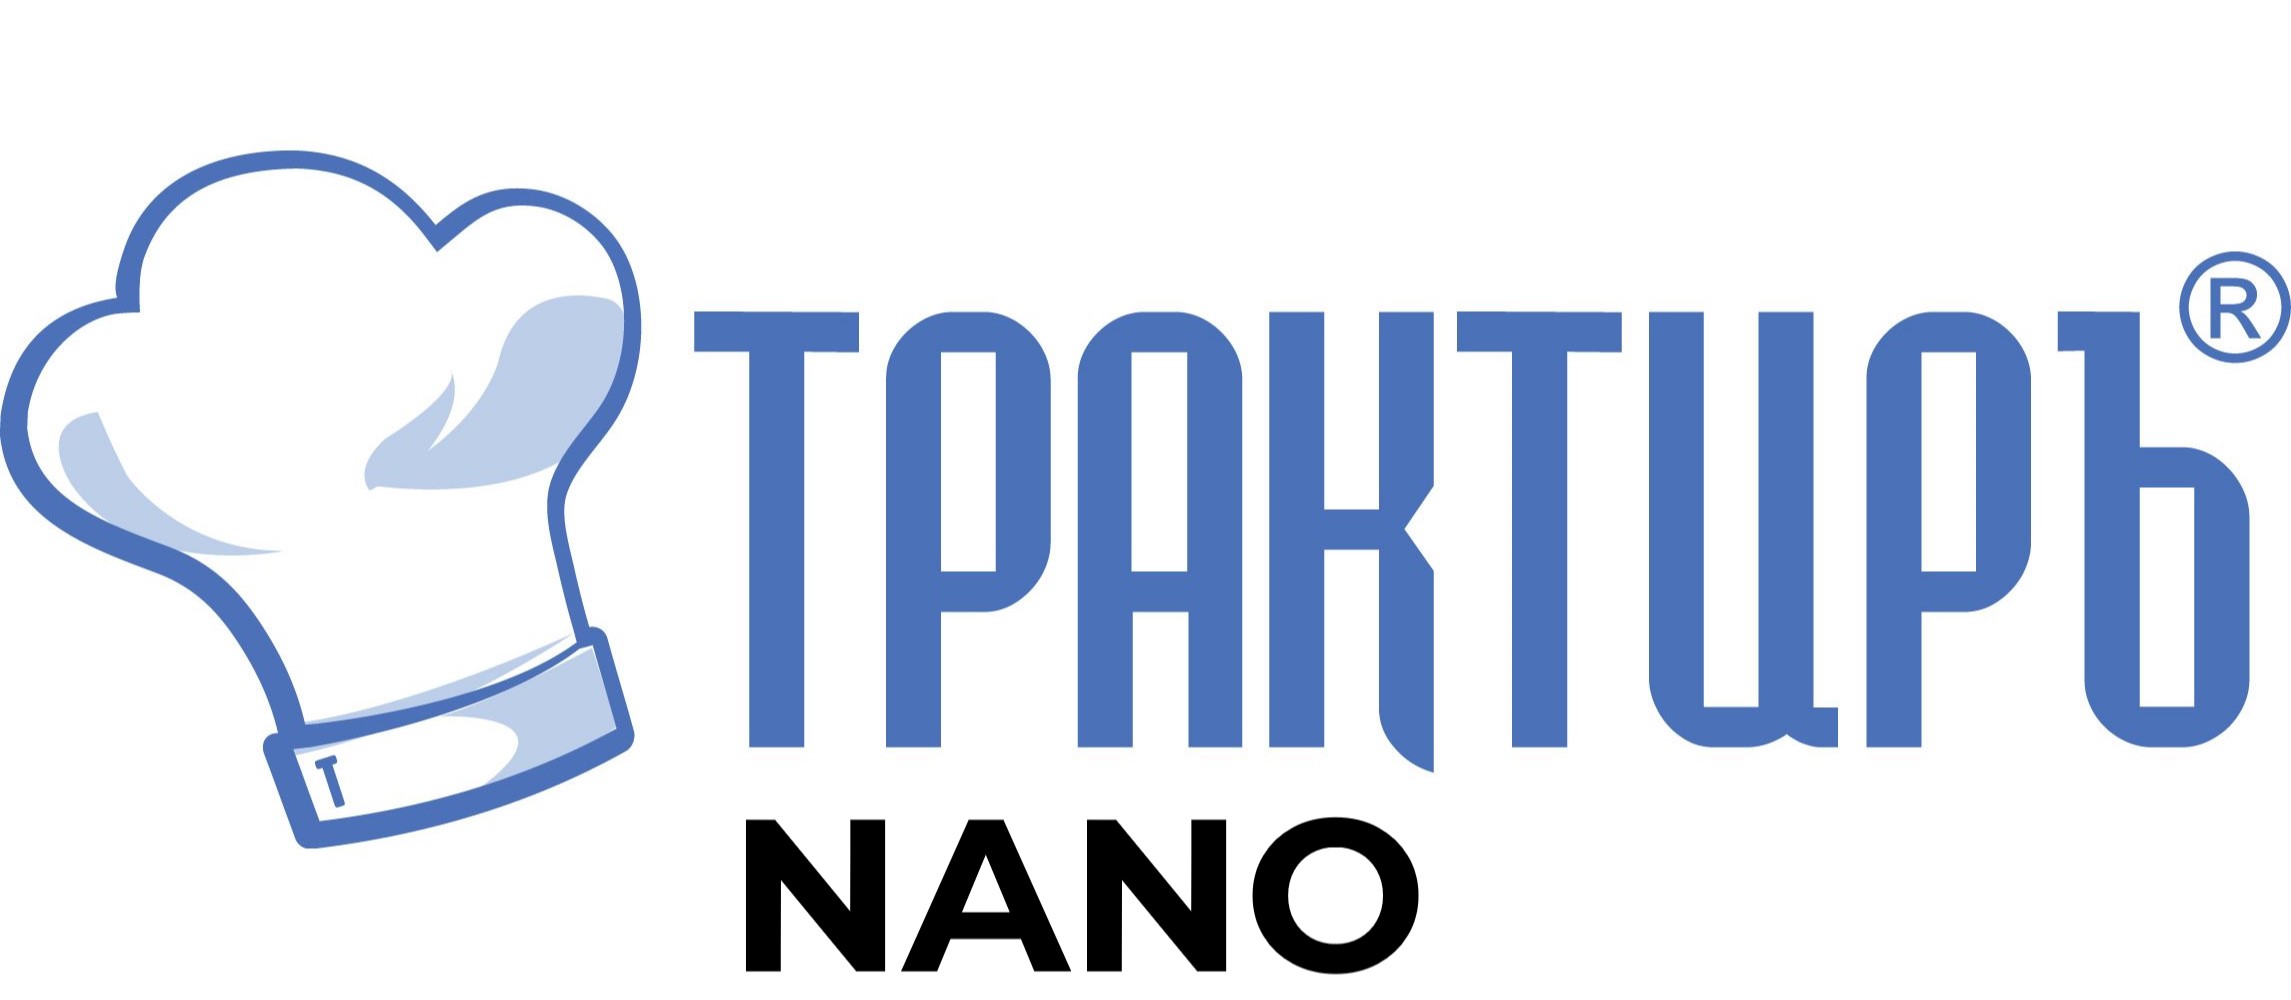 Конфигурация Трактиръ: Nano (Основная поставка) в Таганроге